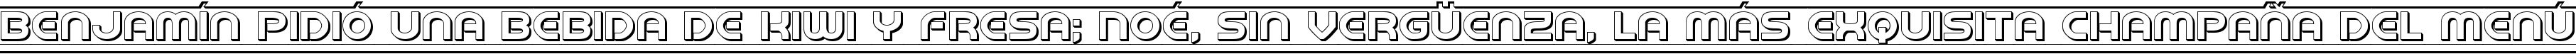 Пример написания шрифтом Barcade 3D текста на испанском